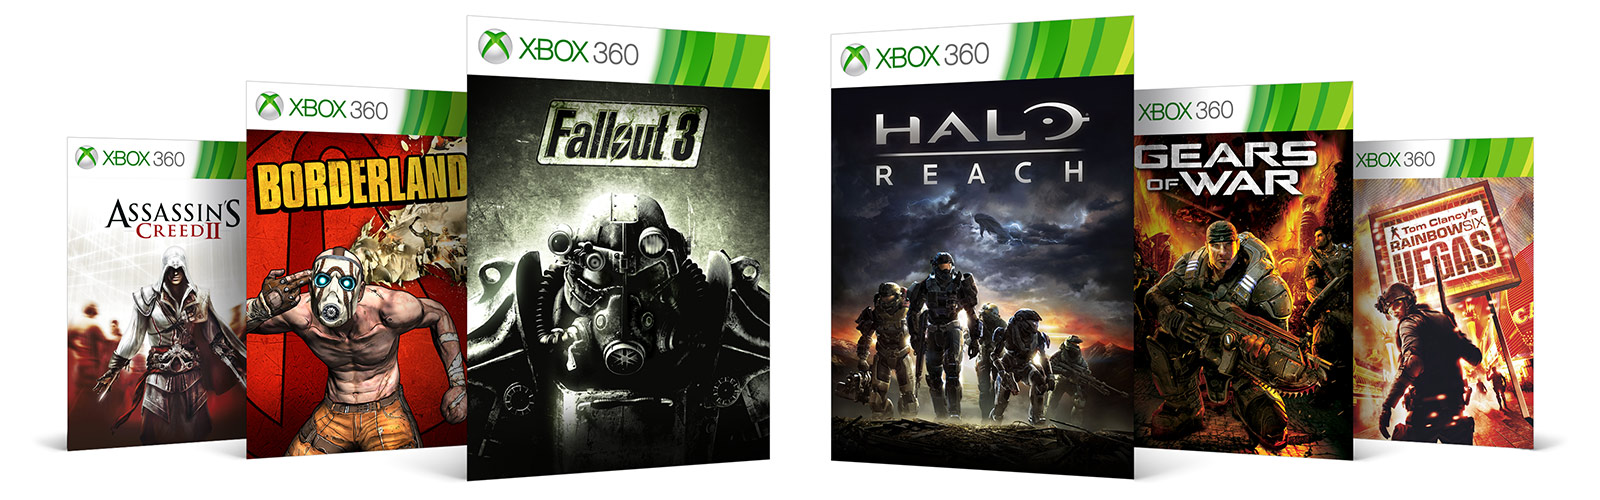 Xbox 360 Games | Xbox - 1600 x 500 jpeg 244kB